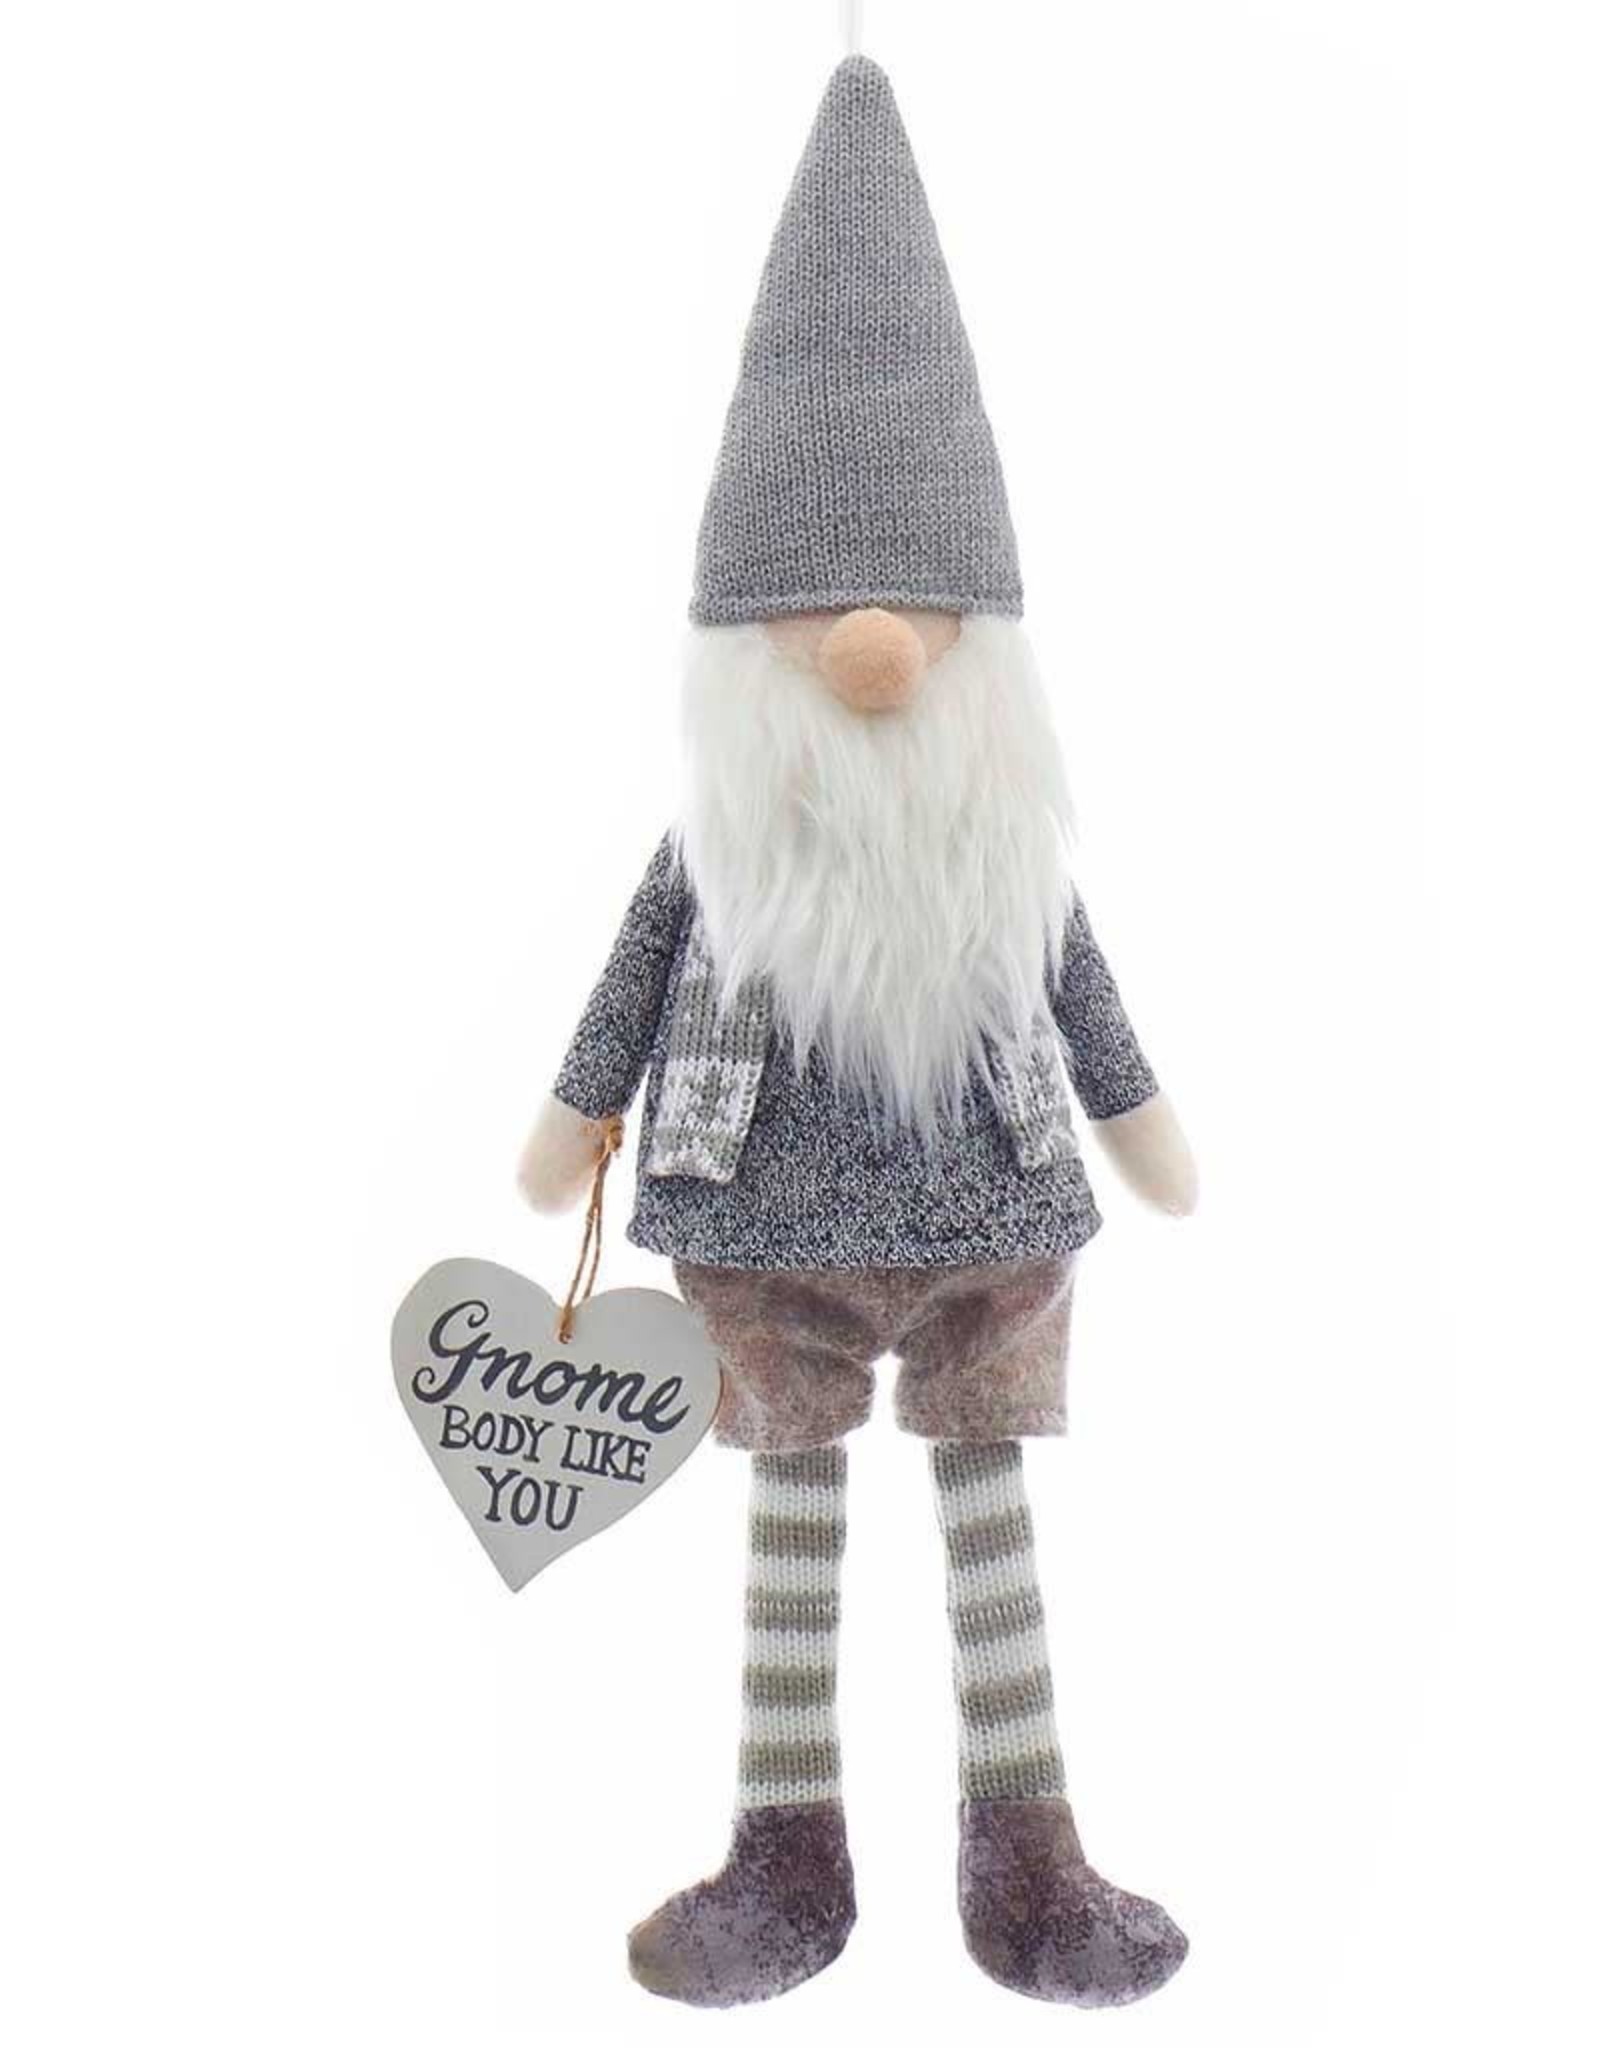 Kurt Adler Gnome Ornament w Heart Sign Gnome Body Like You